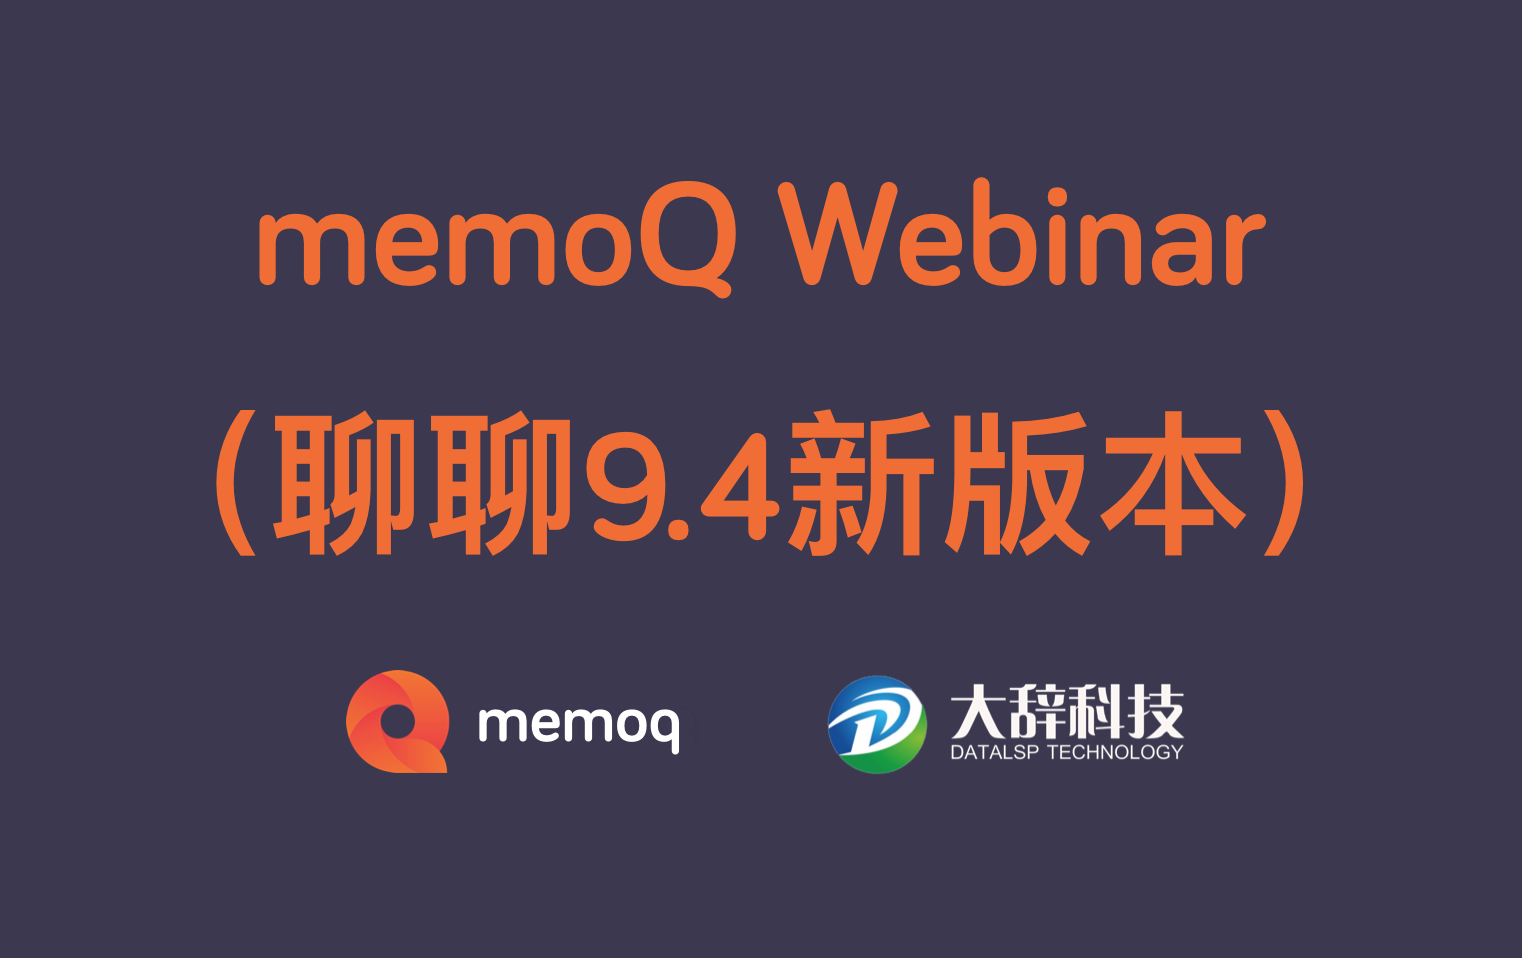 memoQ Webinar聊聊9.4新功能